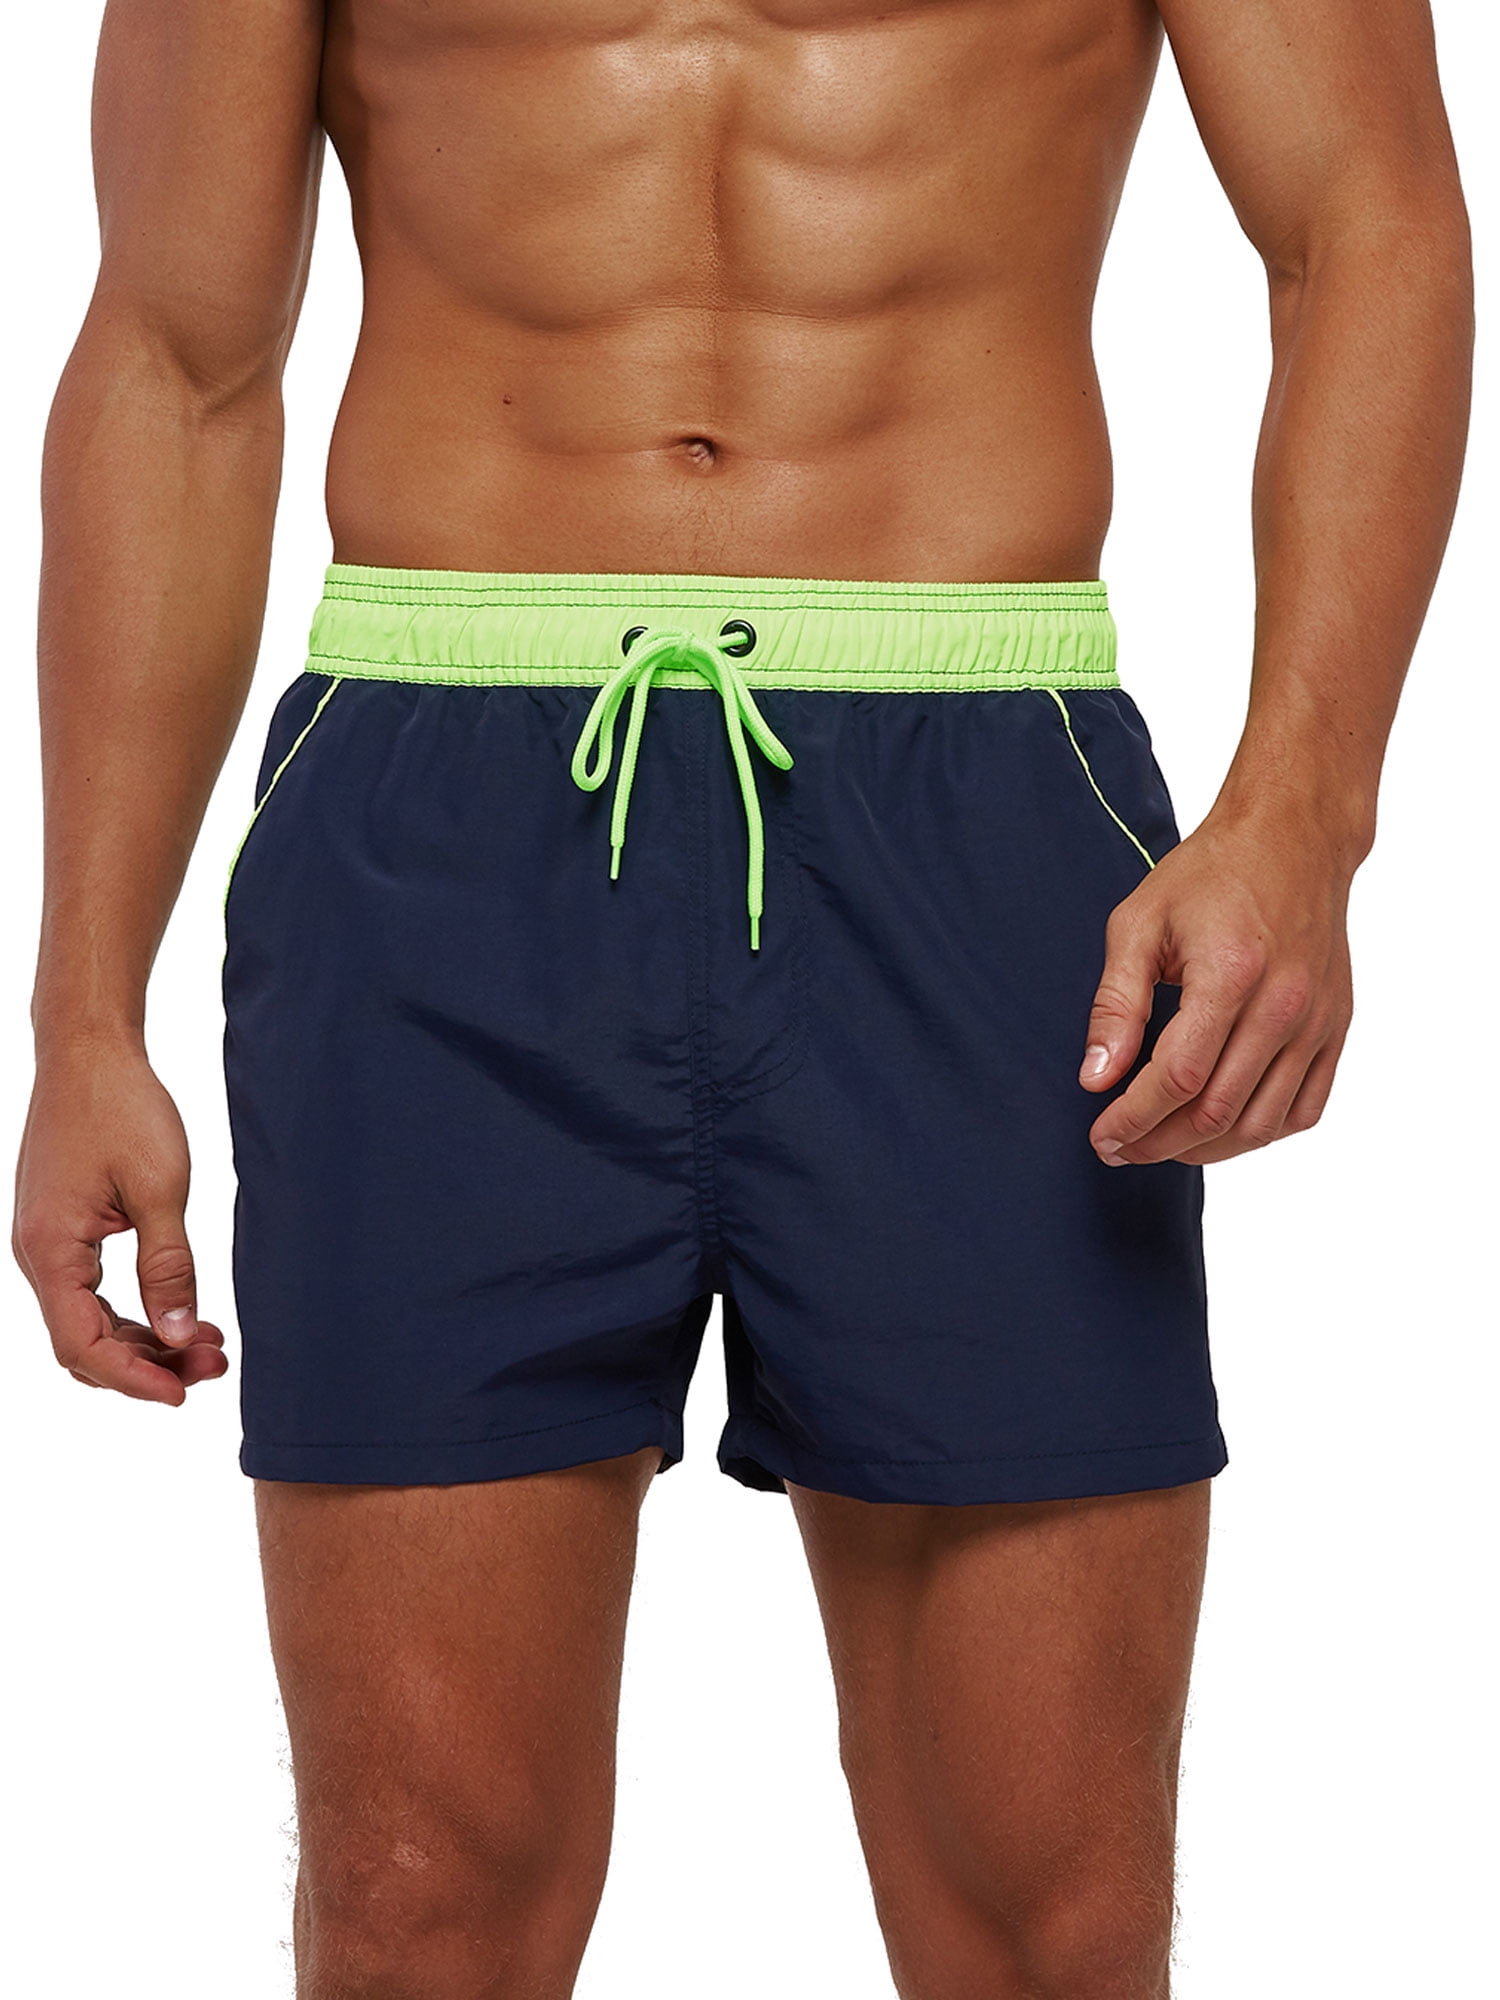 Men's Beach Board Shorts Swimwear Swim Trunks with Pockets Elastic Waist Nylon 